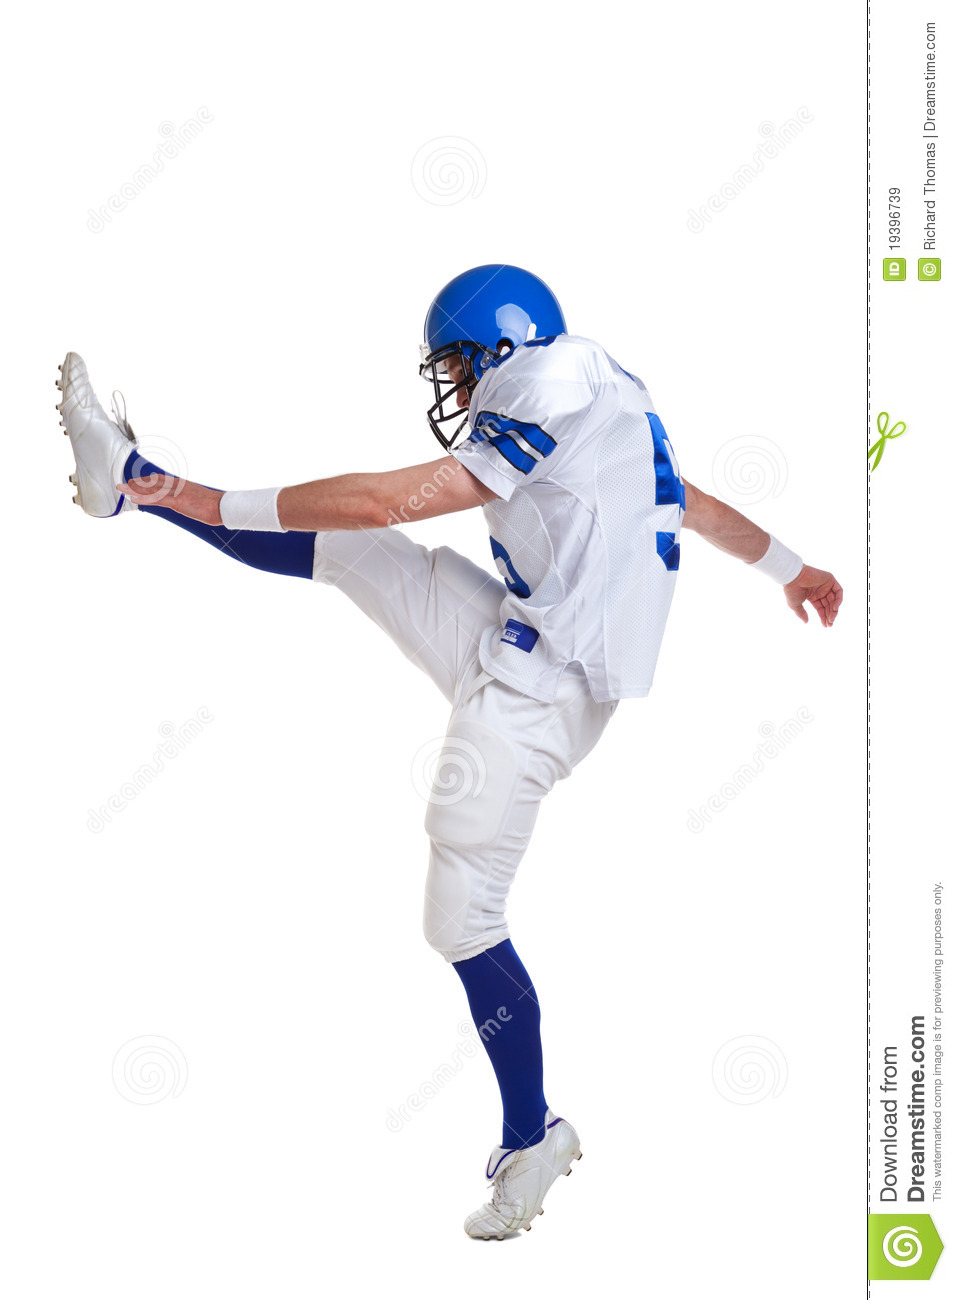 American Football Player Kicking Royalty Free Stock Images   Image